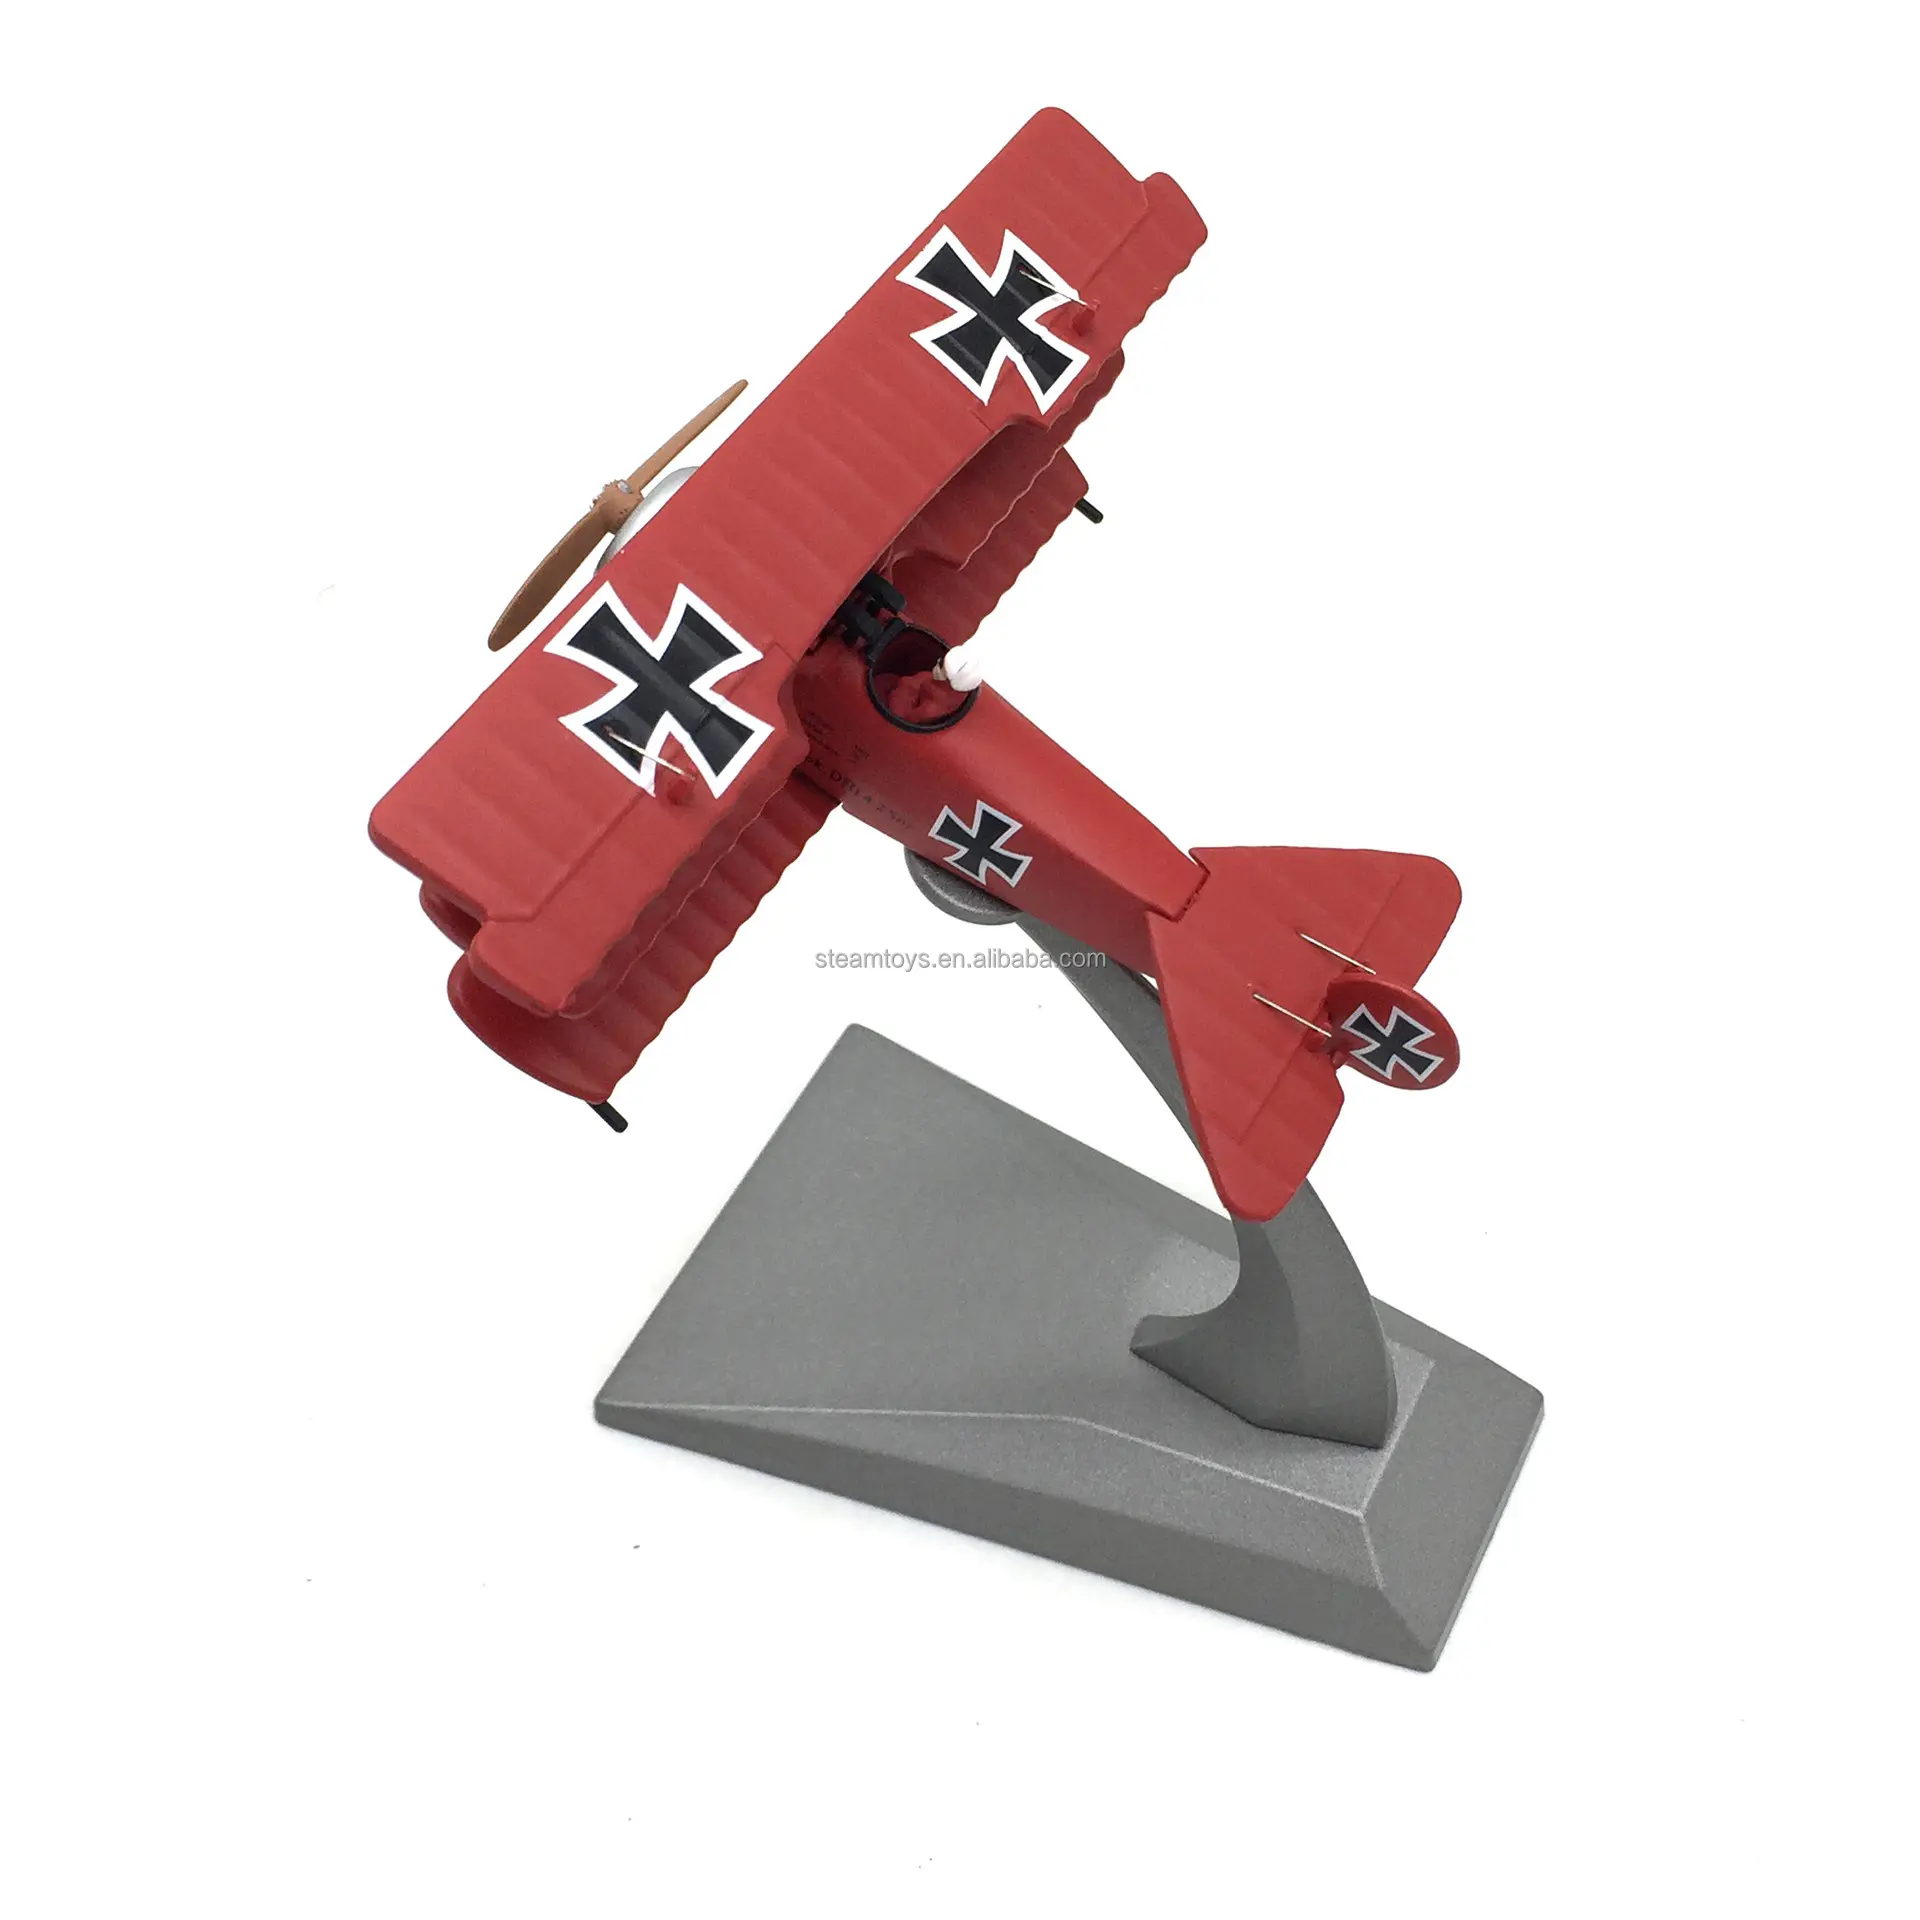 Collection historique 1/72 Modèle réduit d'avion The Great War Fokker DR.1 Red Baron Plane With Display Stand